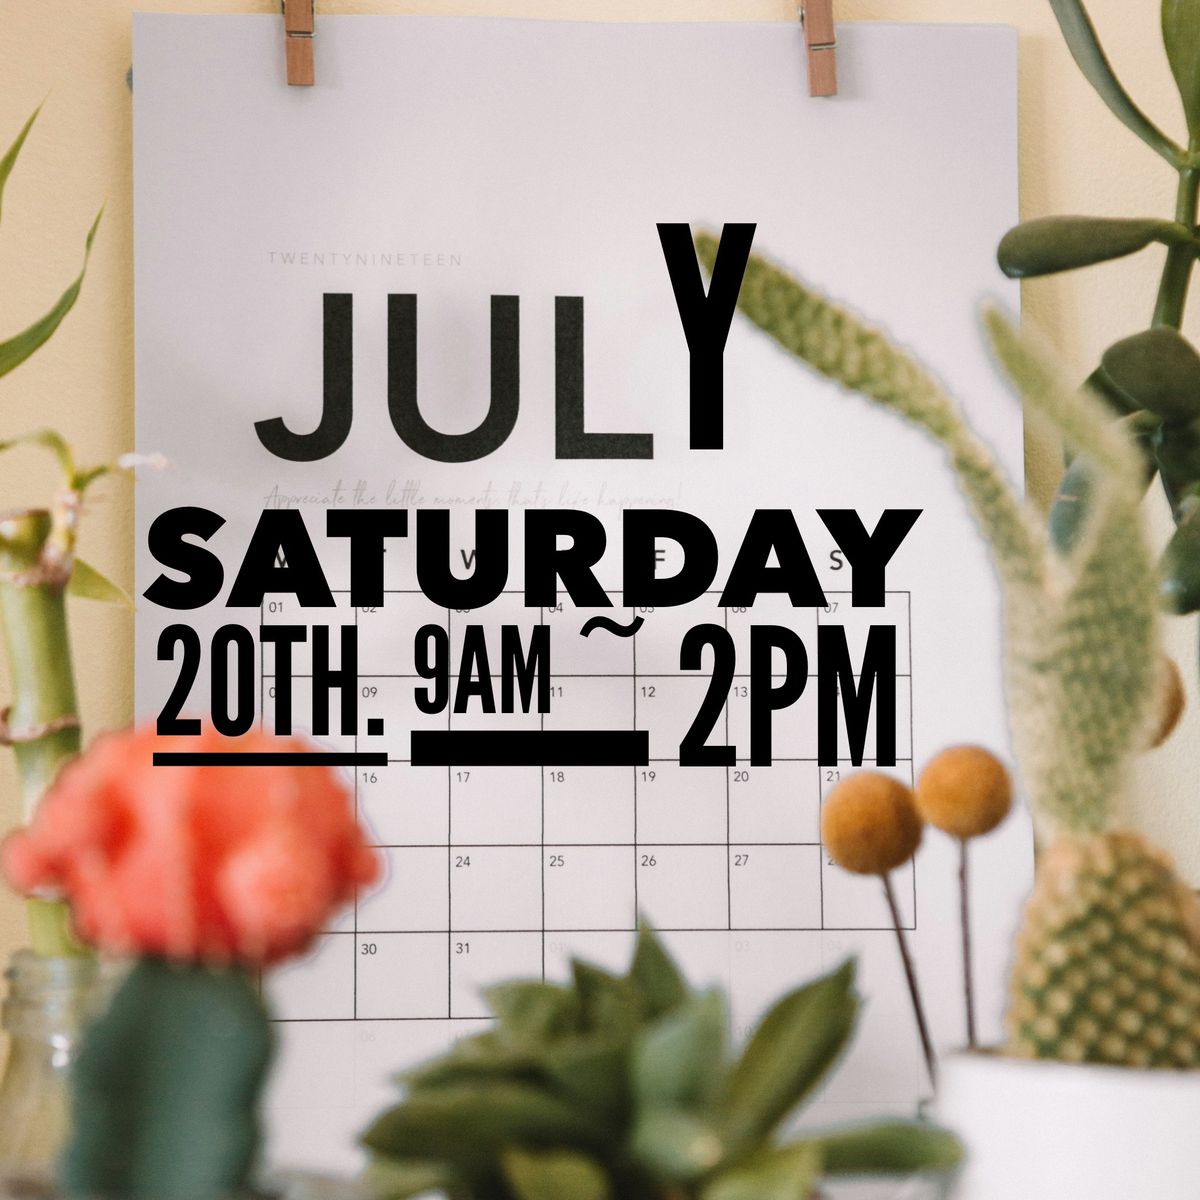 Saturday 20th July - Calwell Market 